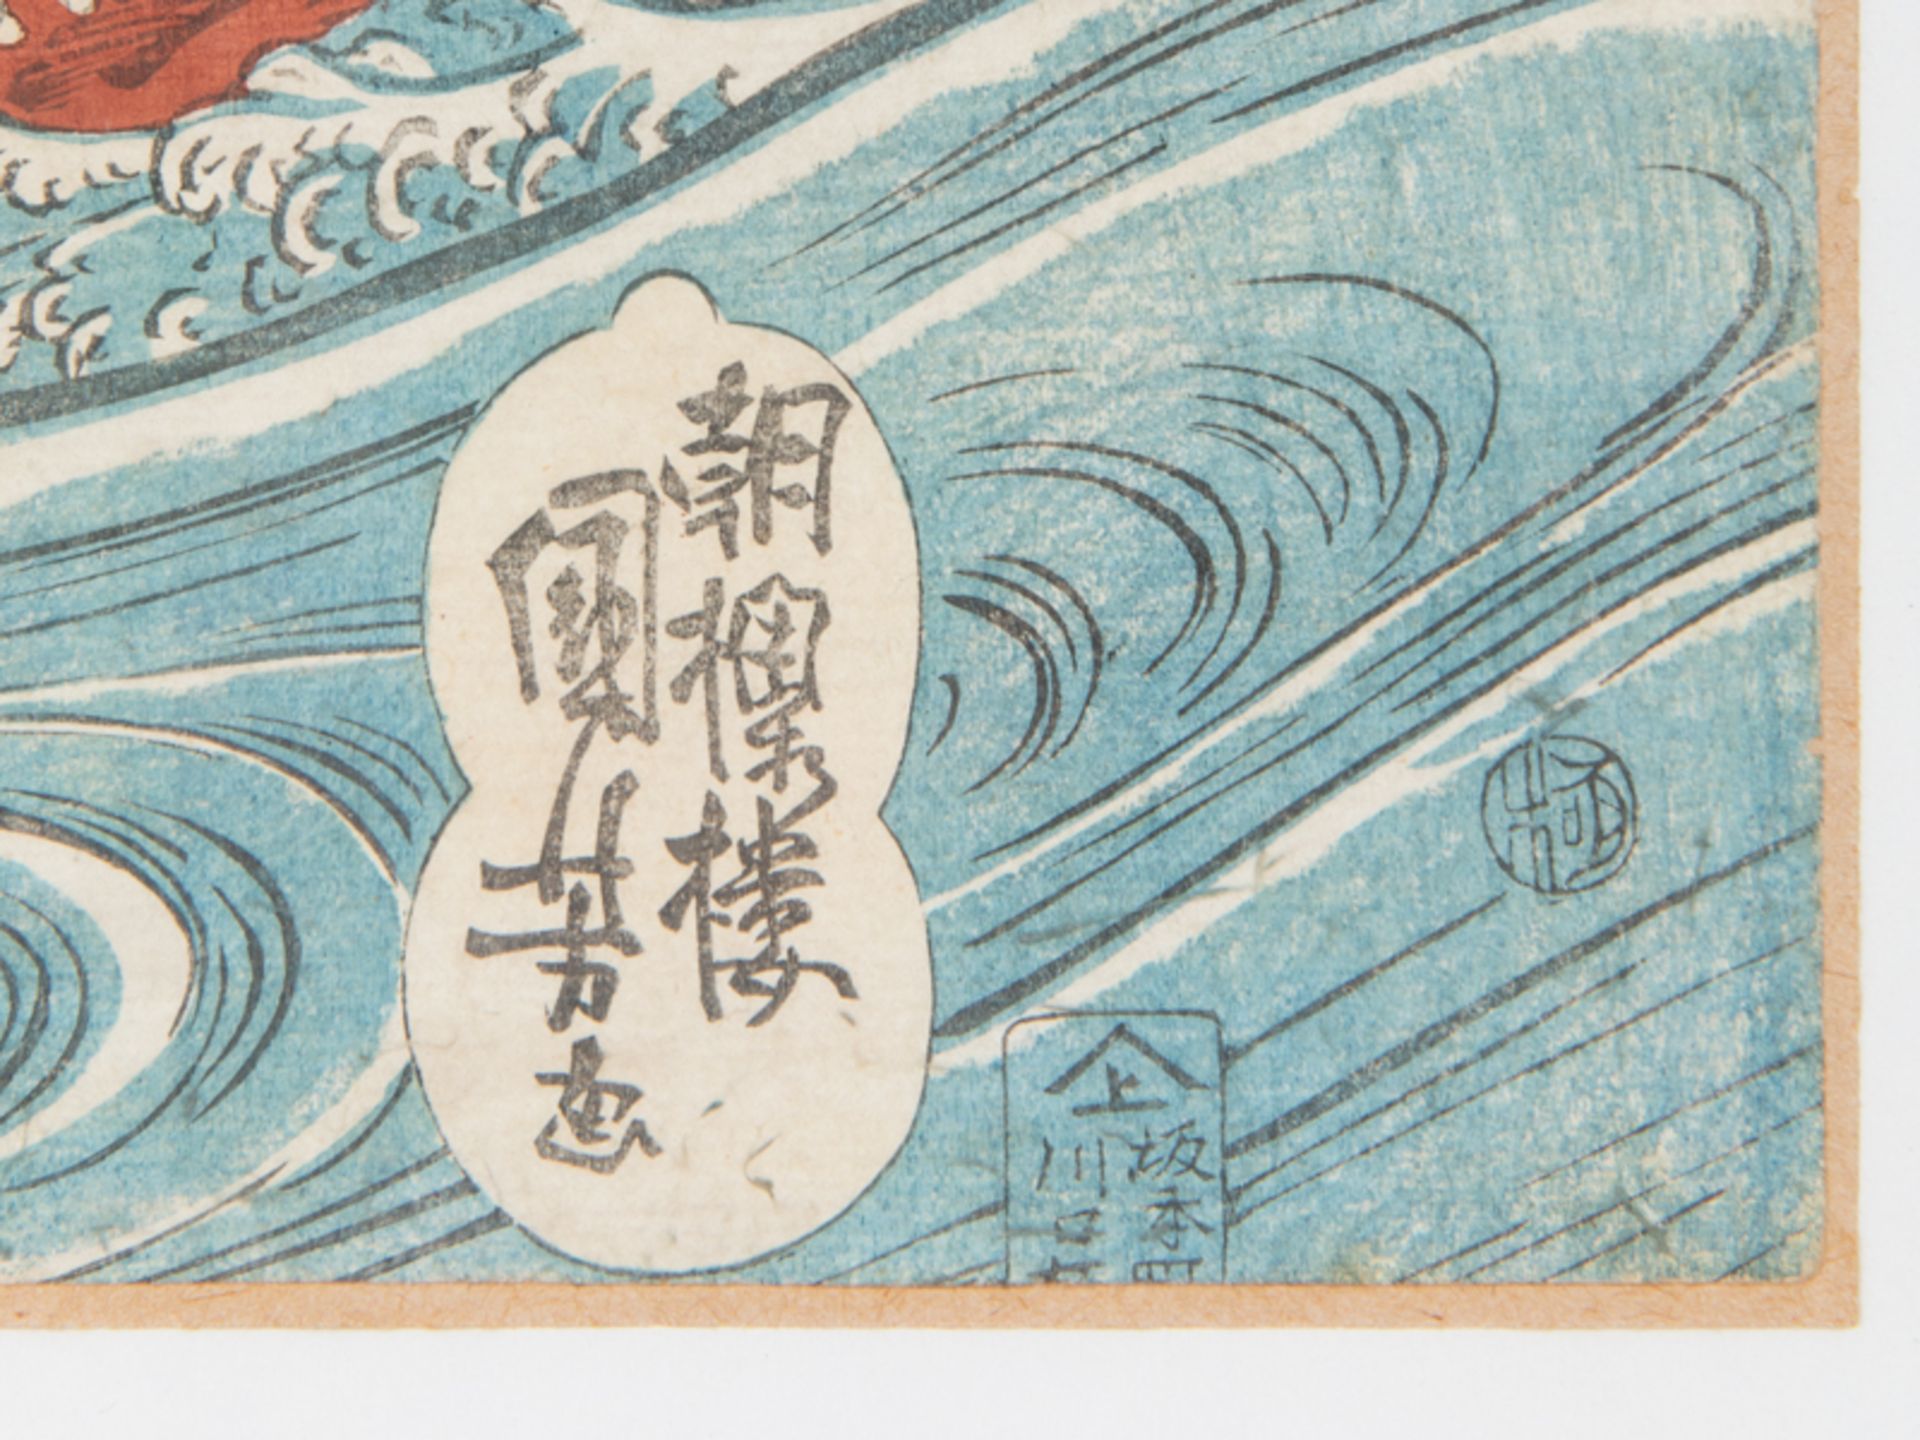 Japanischer Farbholzschnitt "Mythologische Szene - Samurai und Dame im tosenden Meer", 18./19. Jh. - Image 4 of 4